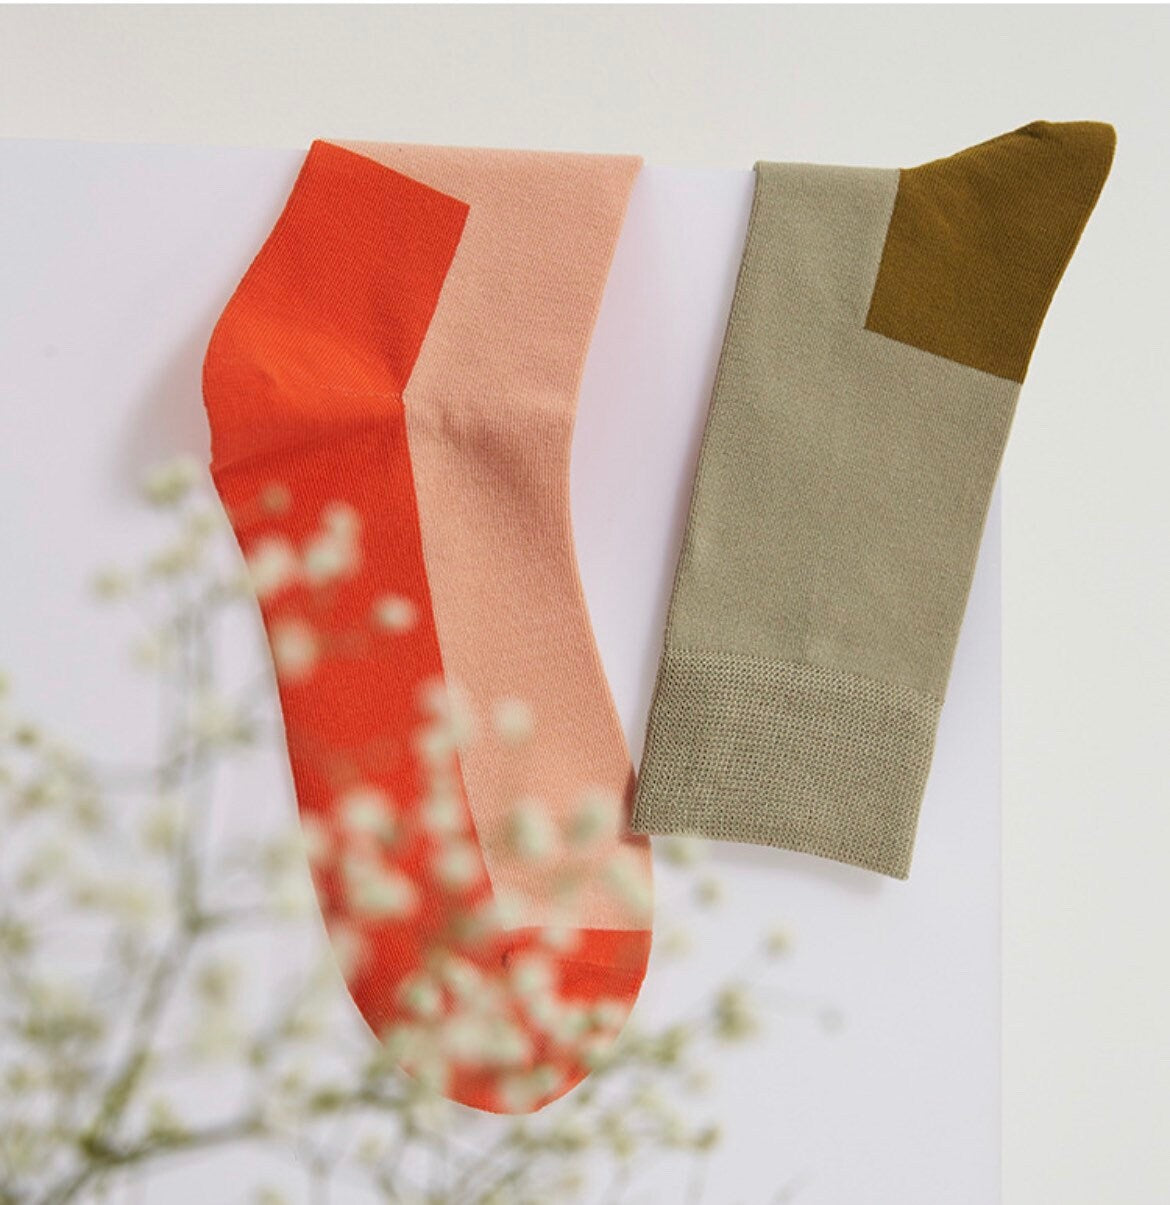 Miss June’s, Cute socks,colorful socks,cool socks,patterned socks,geometric socks,women’s cotton socks